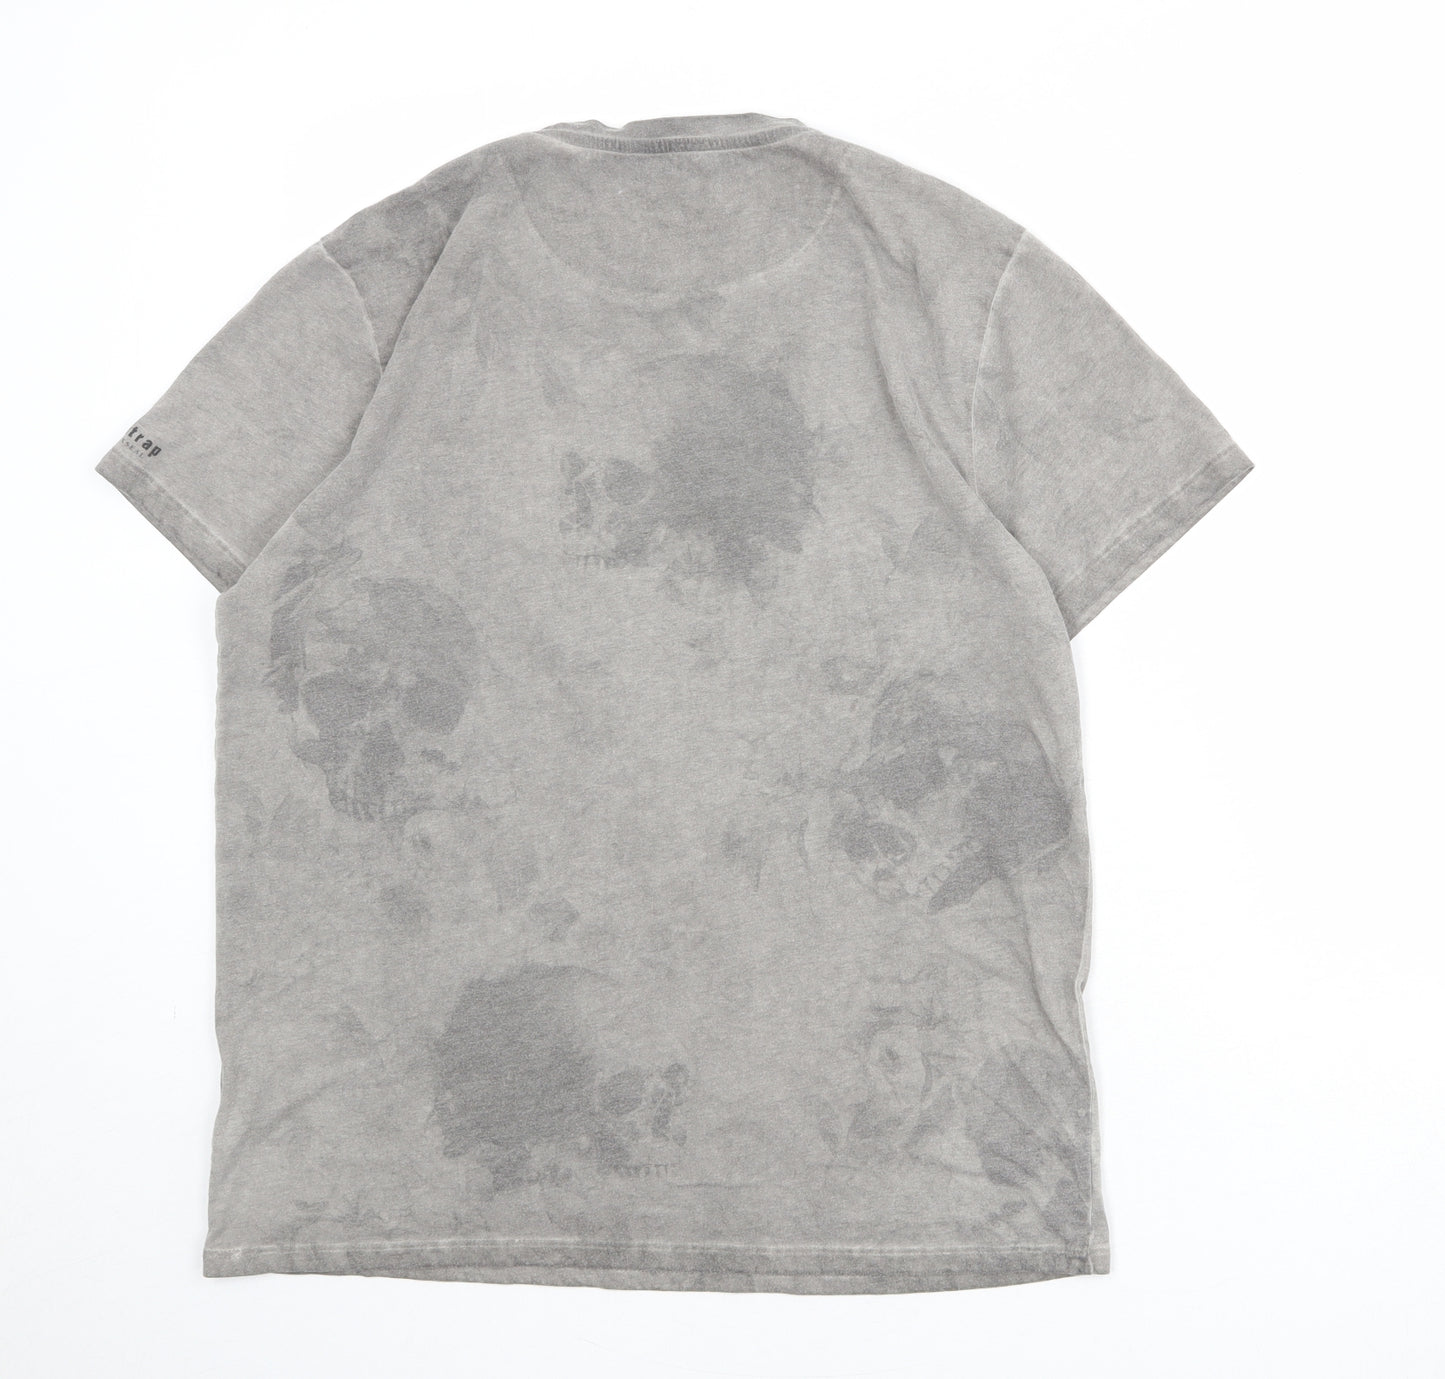 Firetrap Mens Grey Cotton T-Shirt Size L Round Neck - Skull print